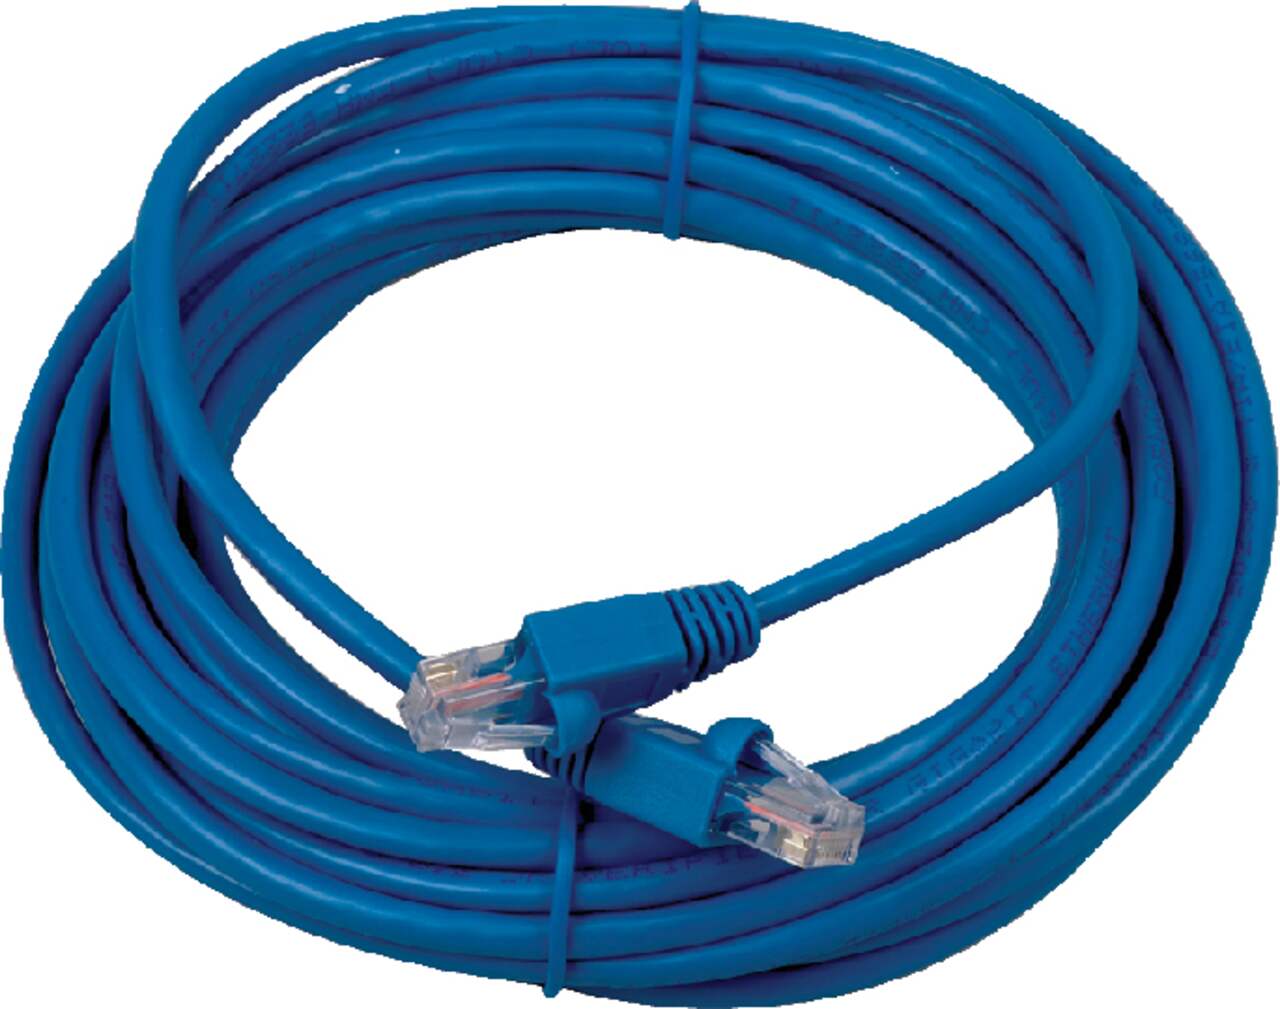 RCA Cat 5 Ethernet Cable, Blue, 25-ft